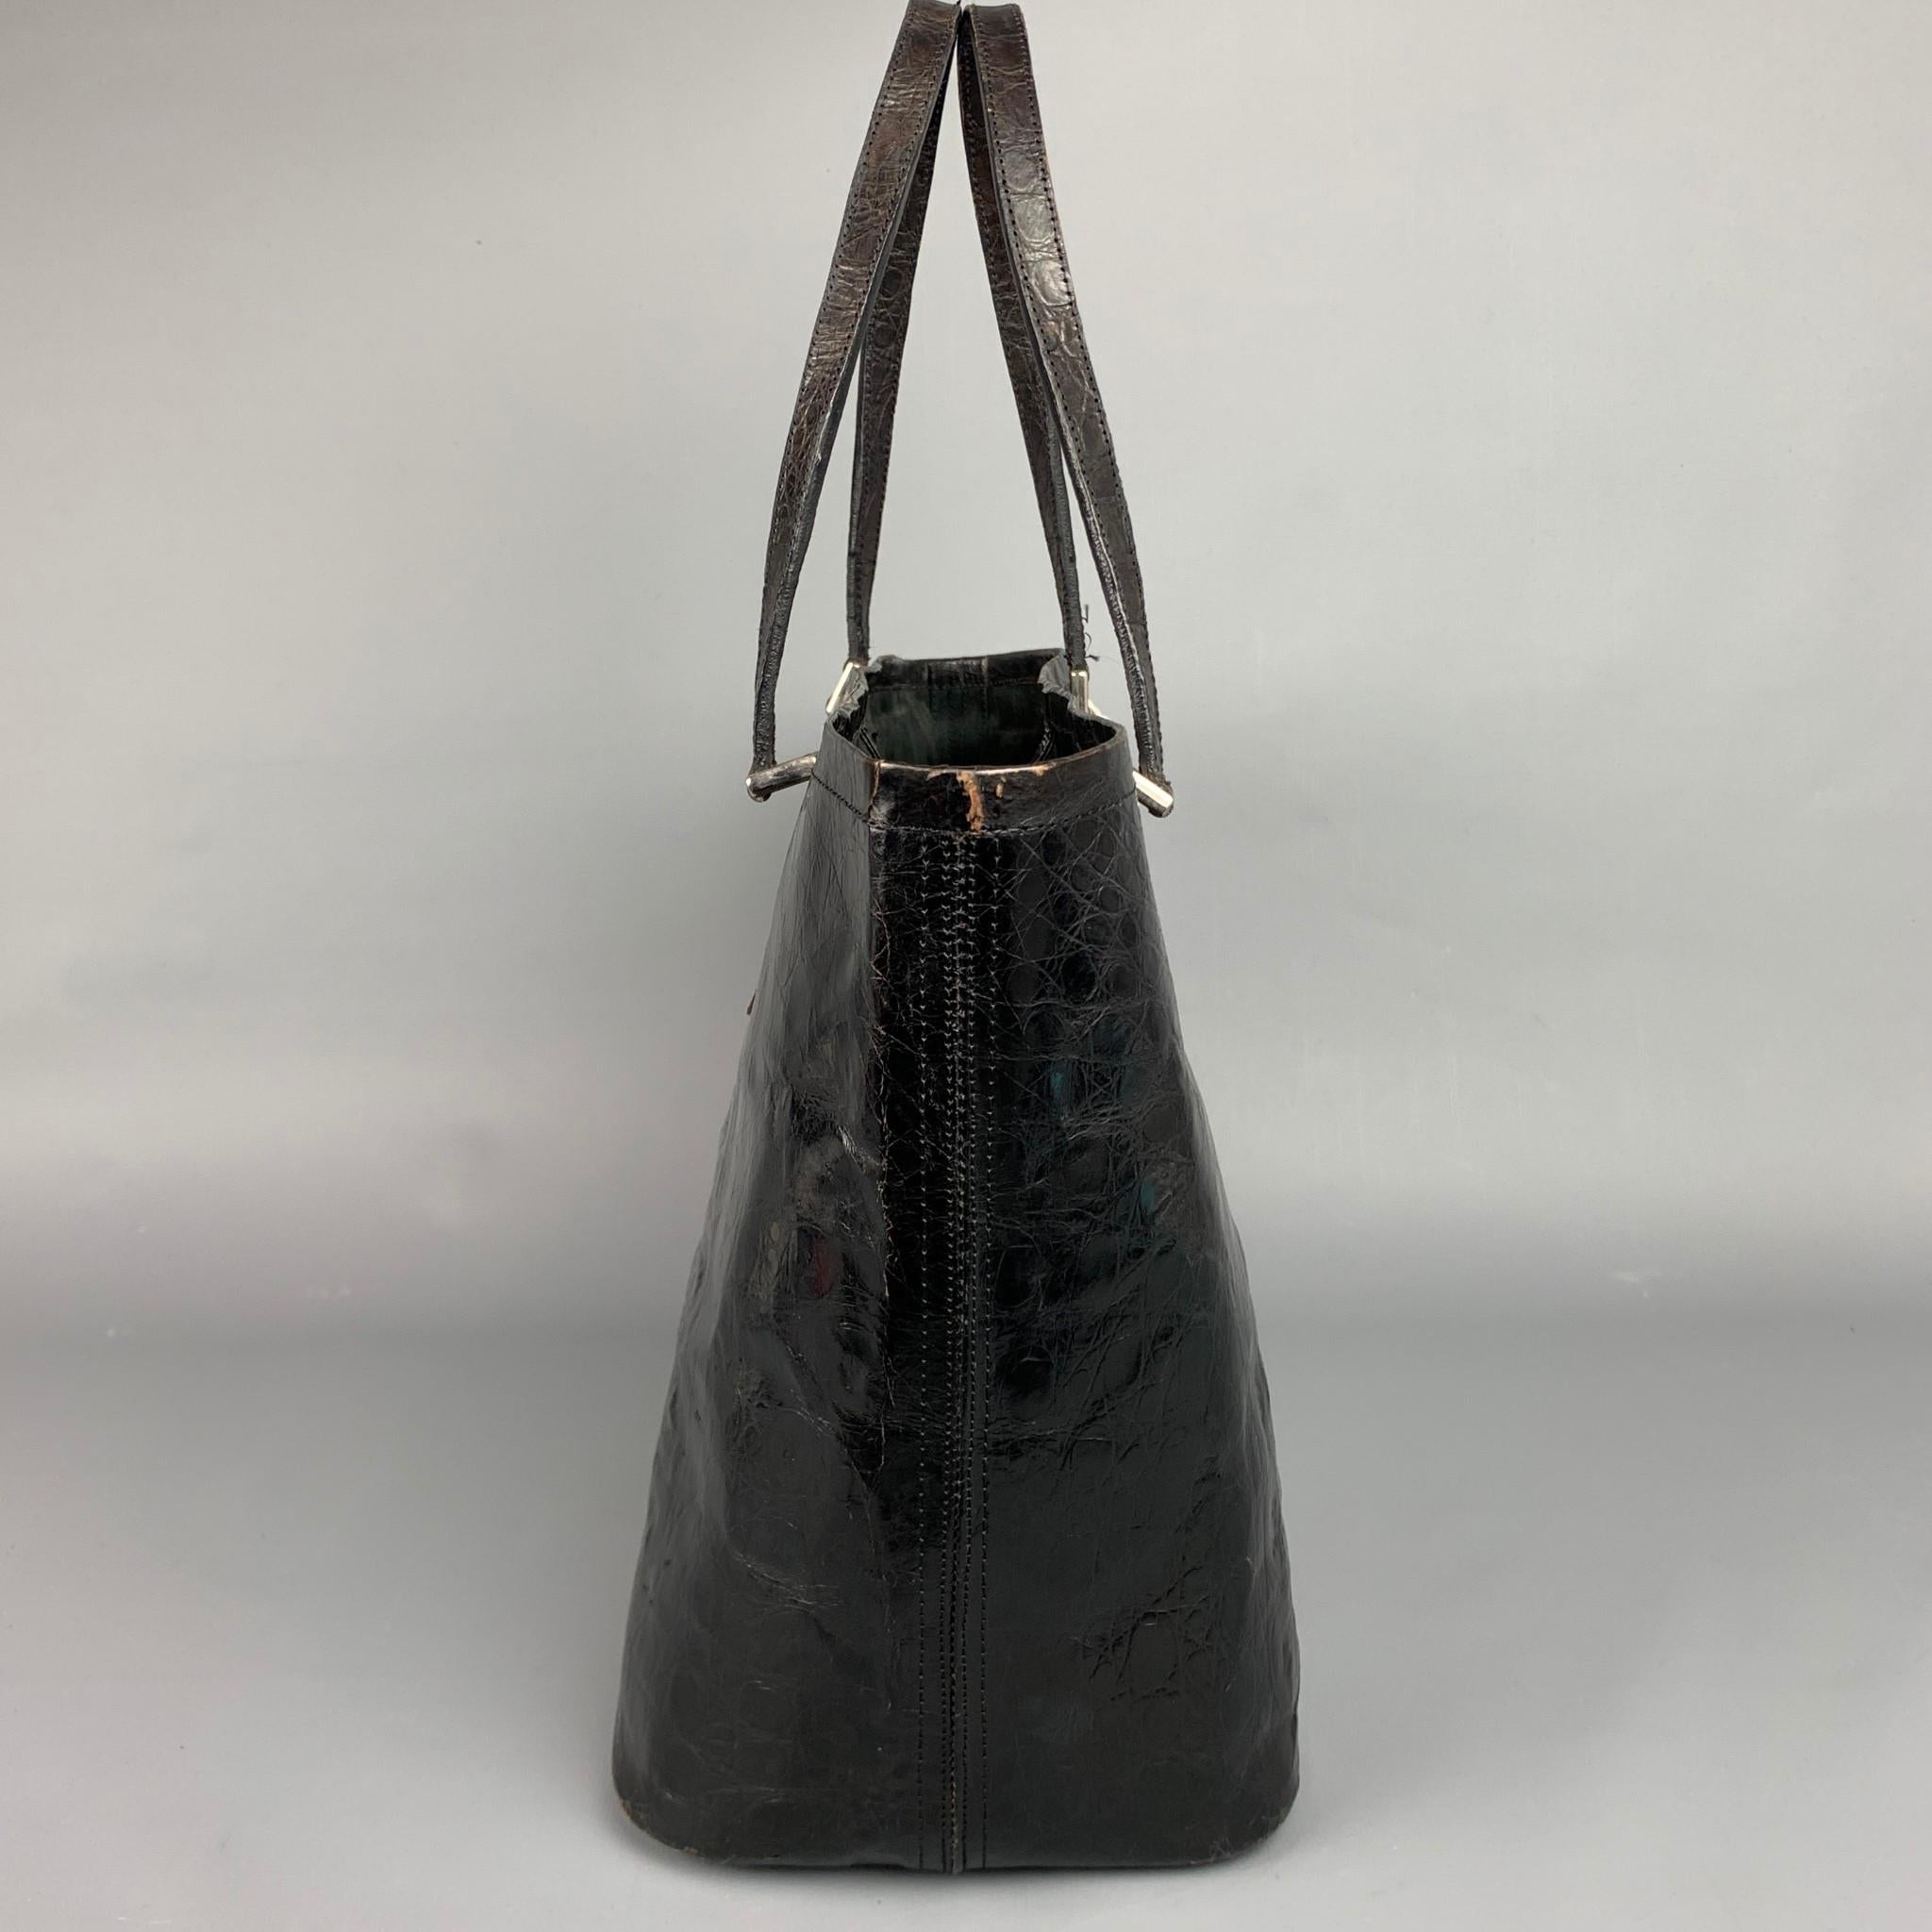 REYNA ICAZA Montecito Black Leather Alligator Tote Handbag For Sale at ...